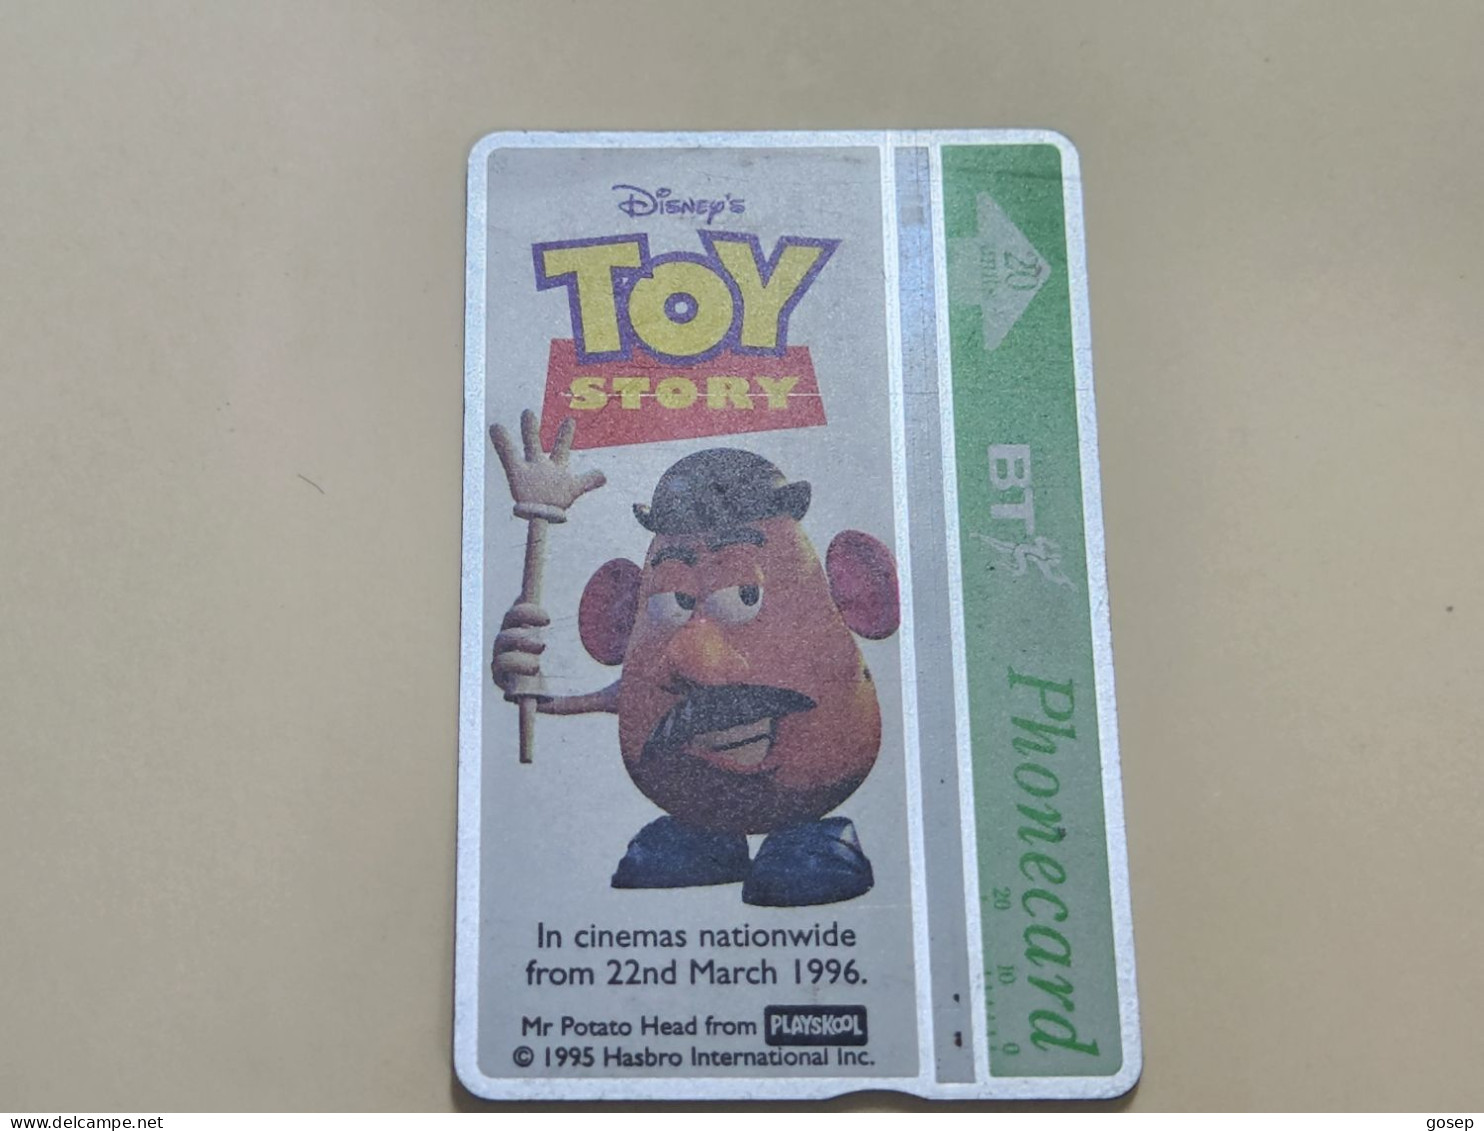 United Kingdom-(BTA148)Disney's Toy-1potato Head-(244)(20units)(662B07796)-price Cataloge 3.00£-used+1card Prepiad Free - BT Advertising Issues